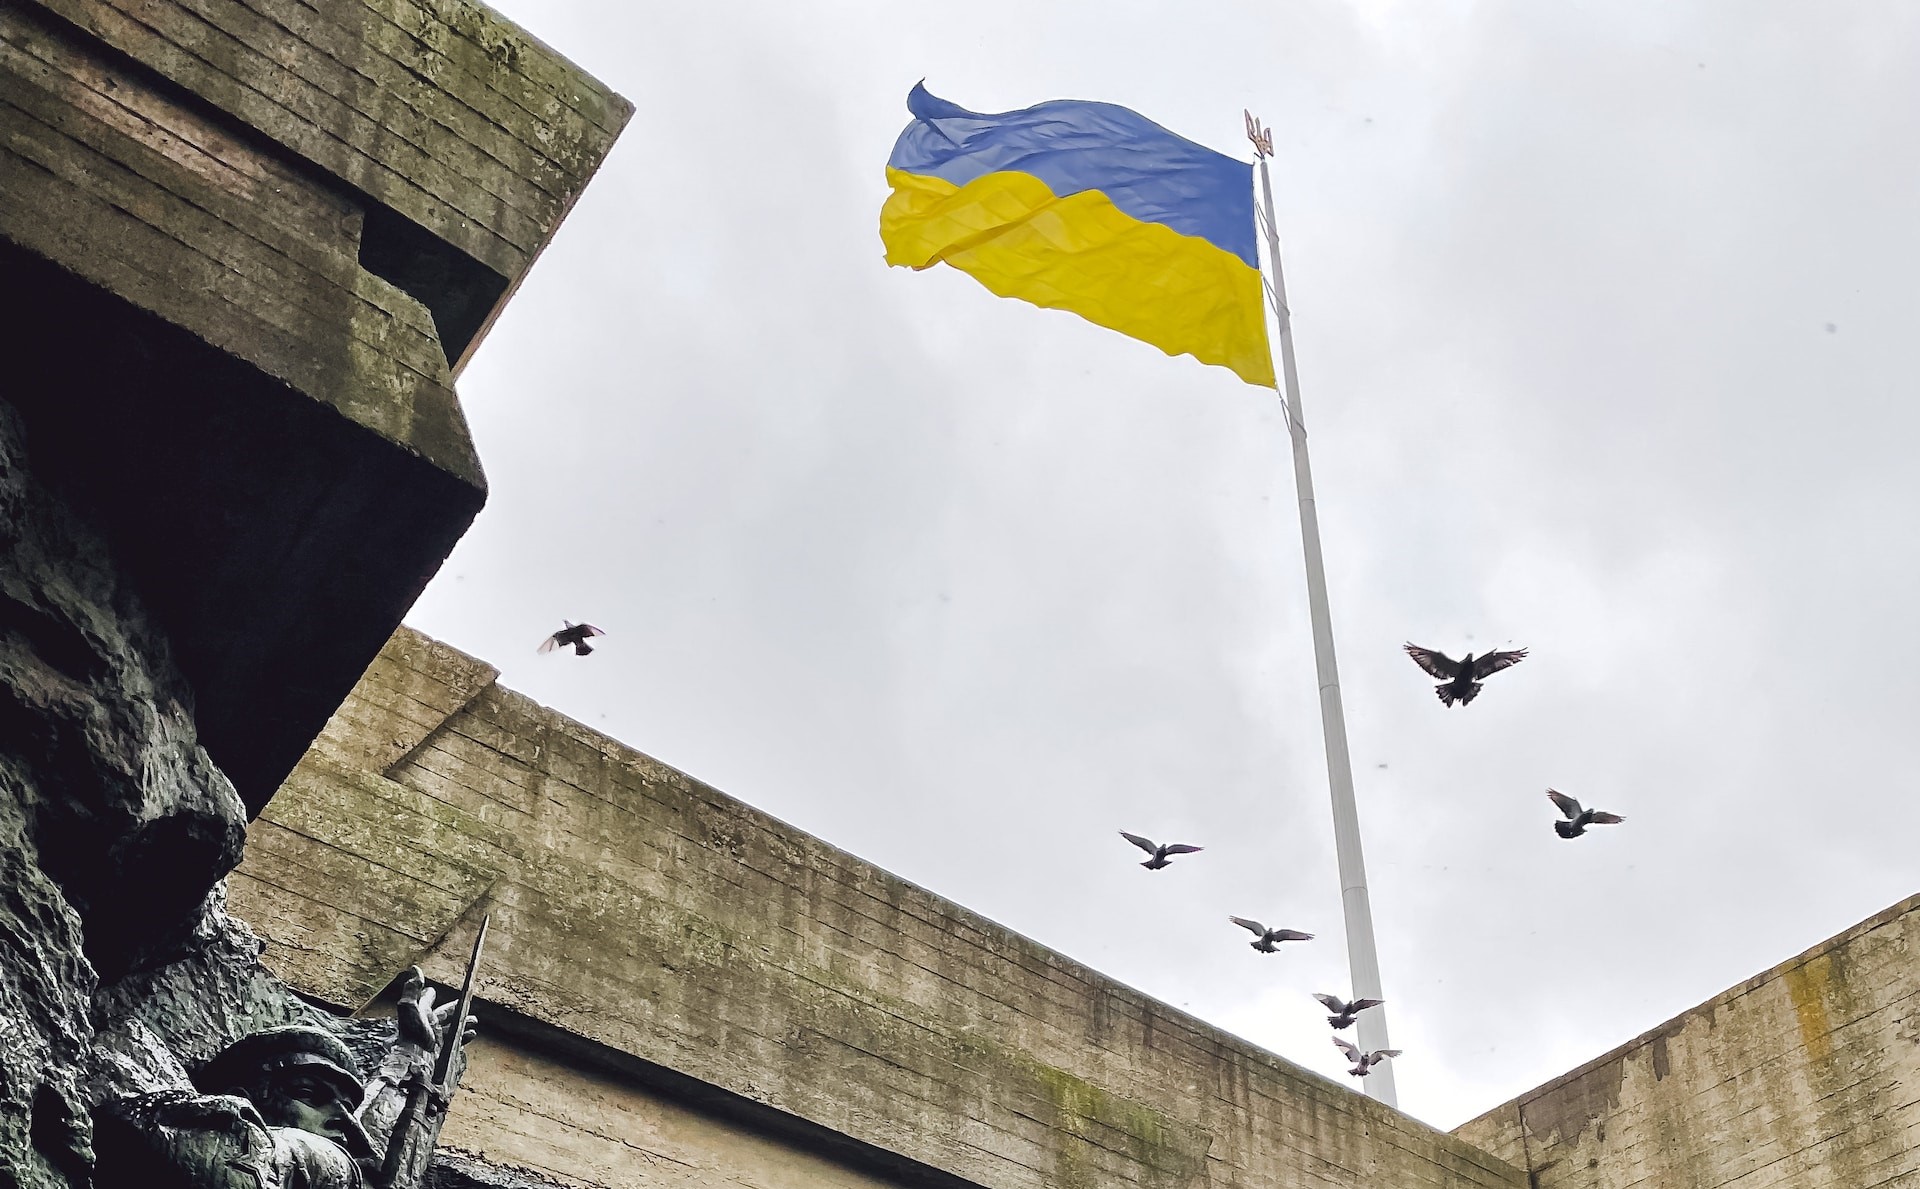 A Ukrainian flag flying over a war memorial as birds fly up